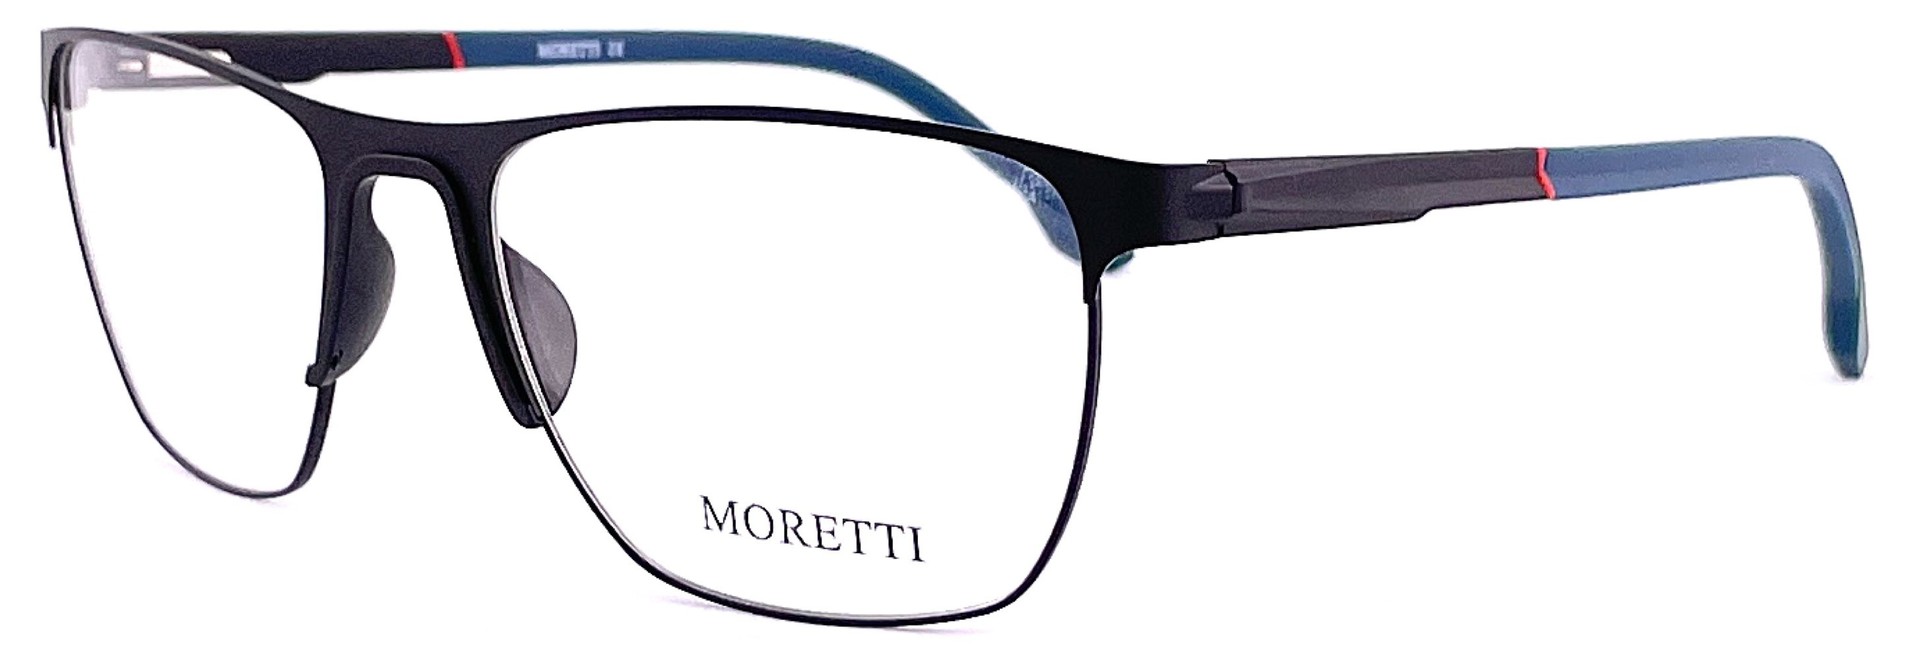 Moretti HC05-10 C1A-1 2